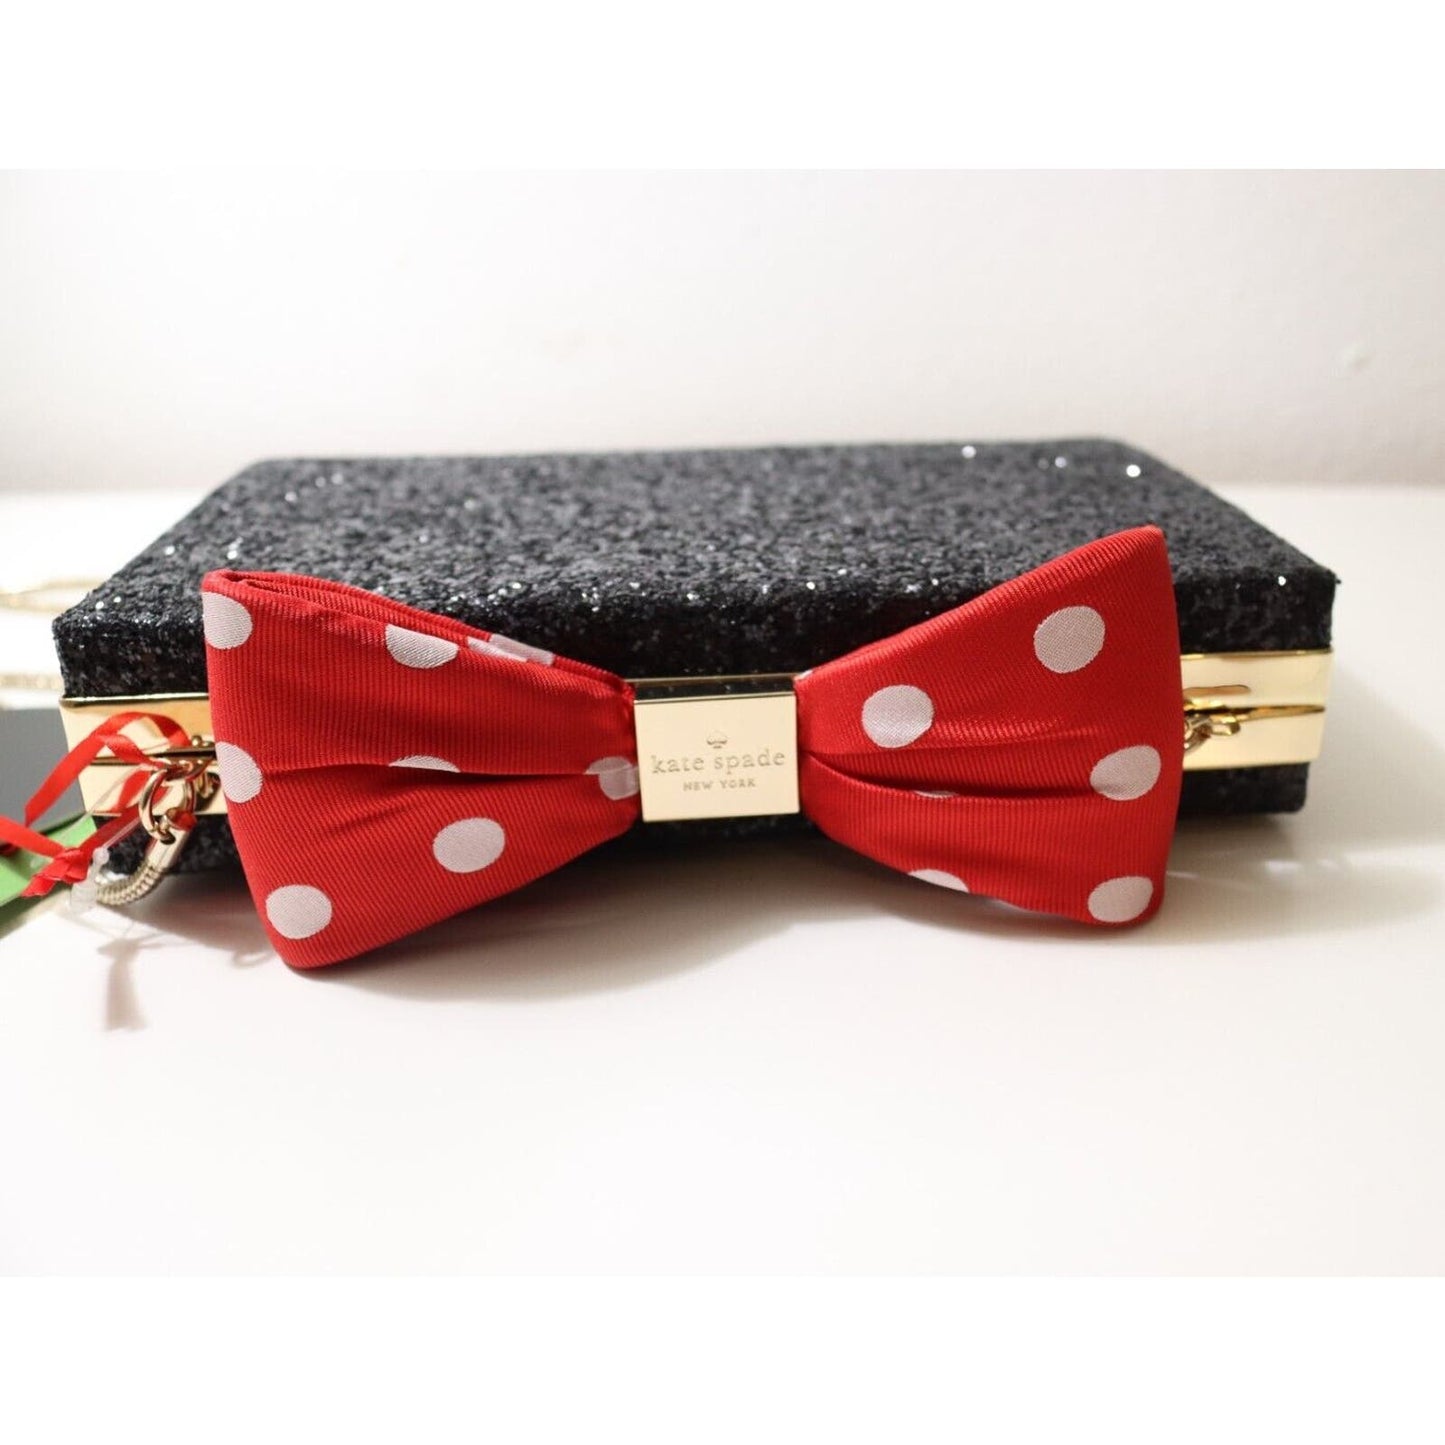 New Kate Spade x Disney Minnie Mouse Bow Clutch Crossbody Handbag Purse